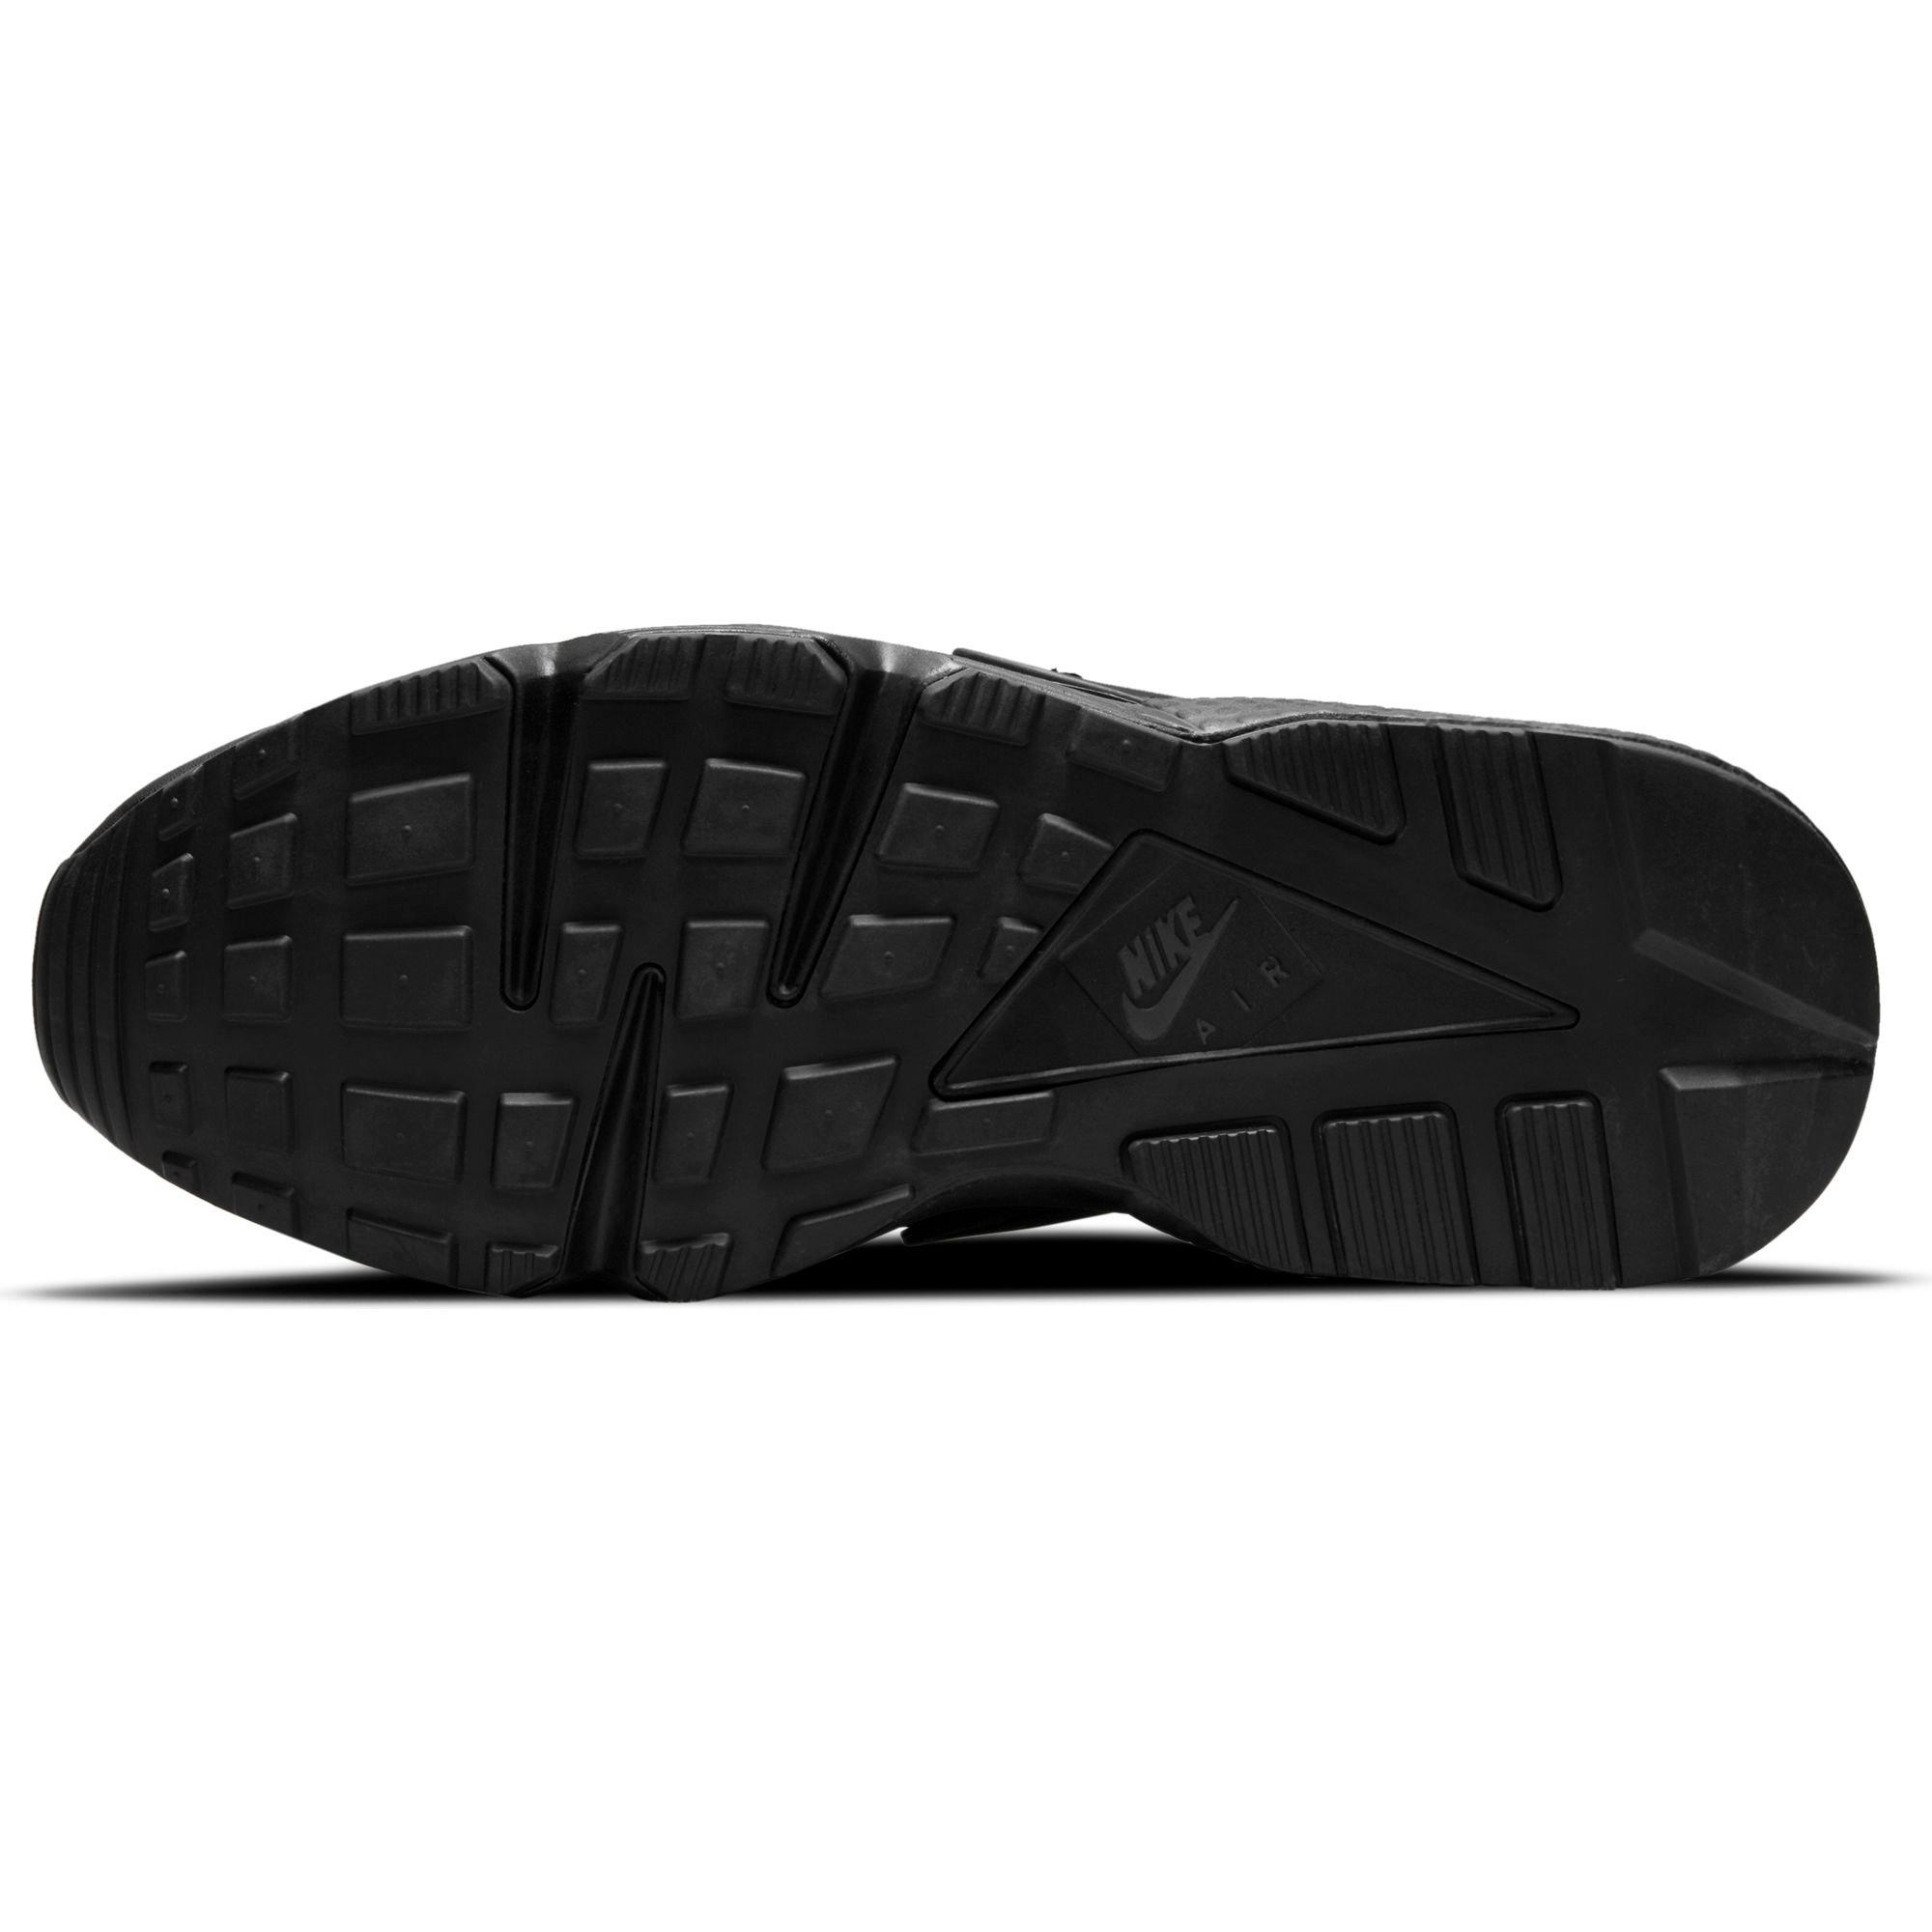 Nike Air "Black/Anthracite" Men's Shoe